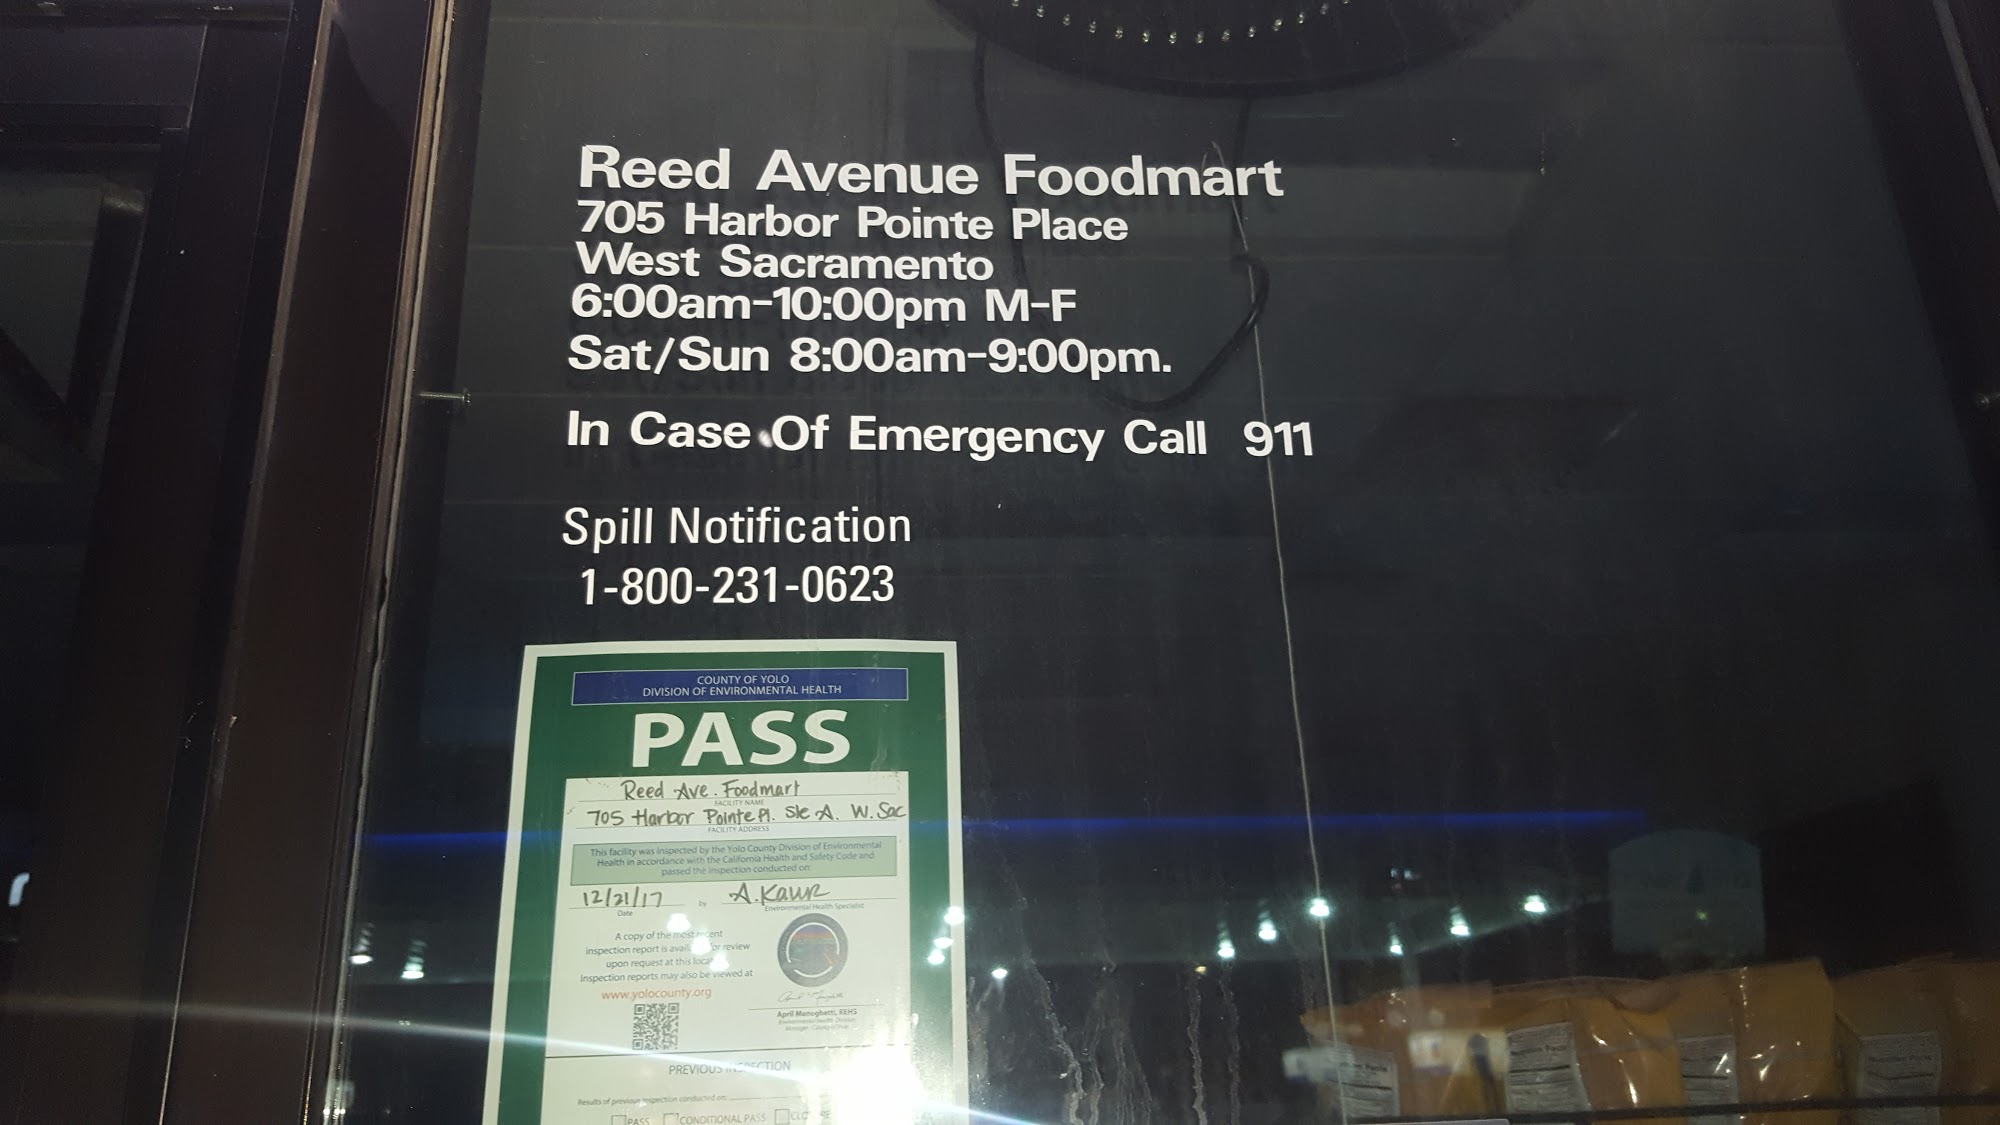 Reed Avenue Foodmart